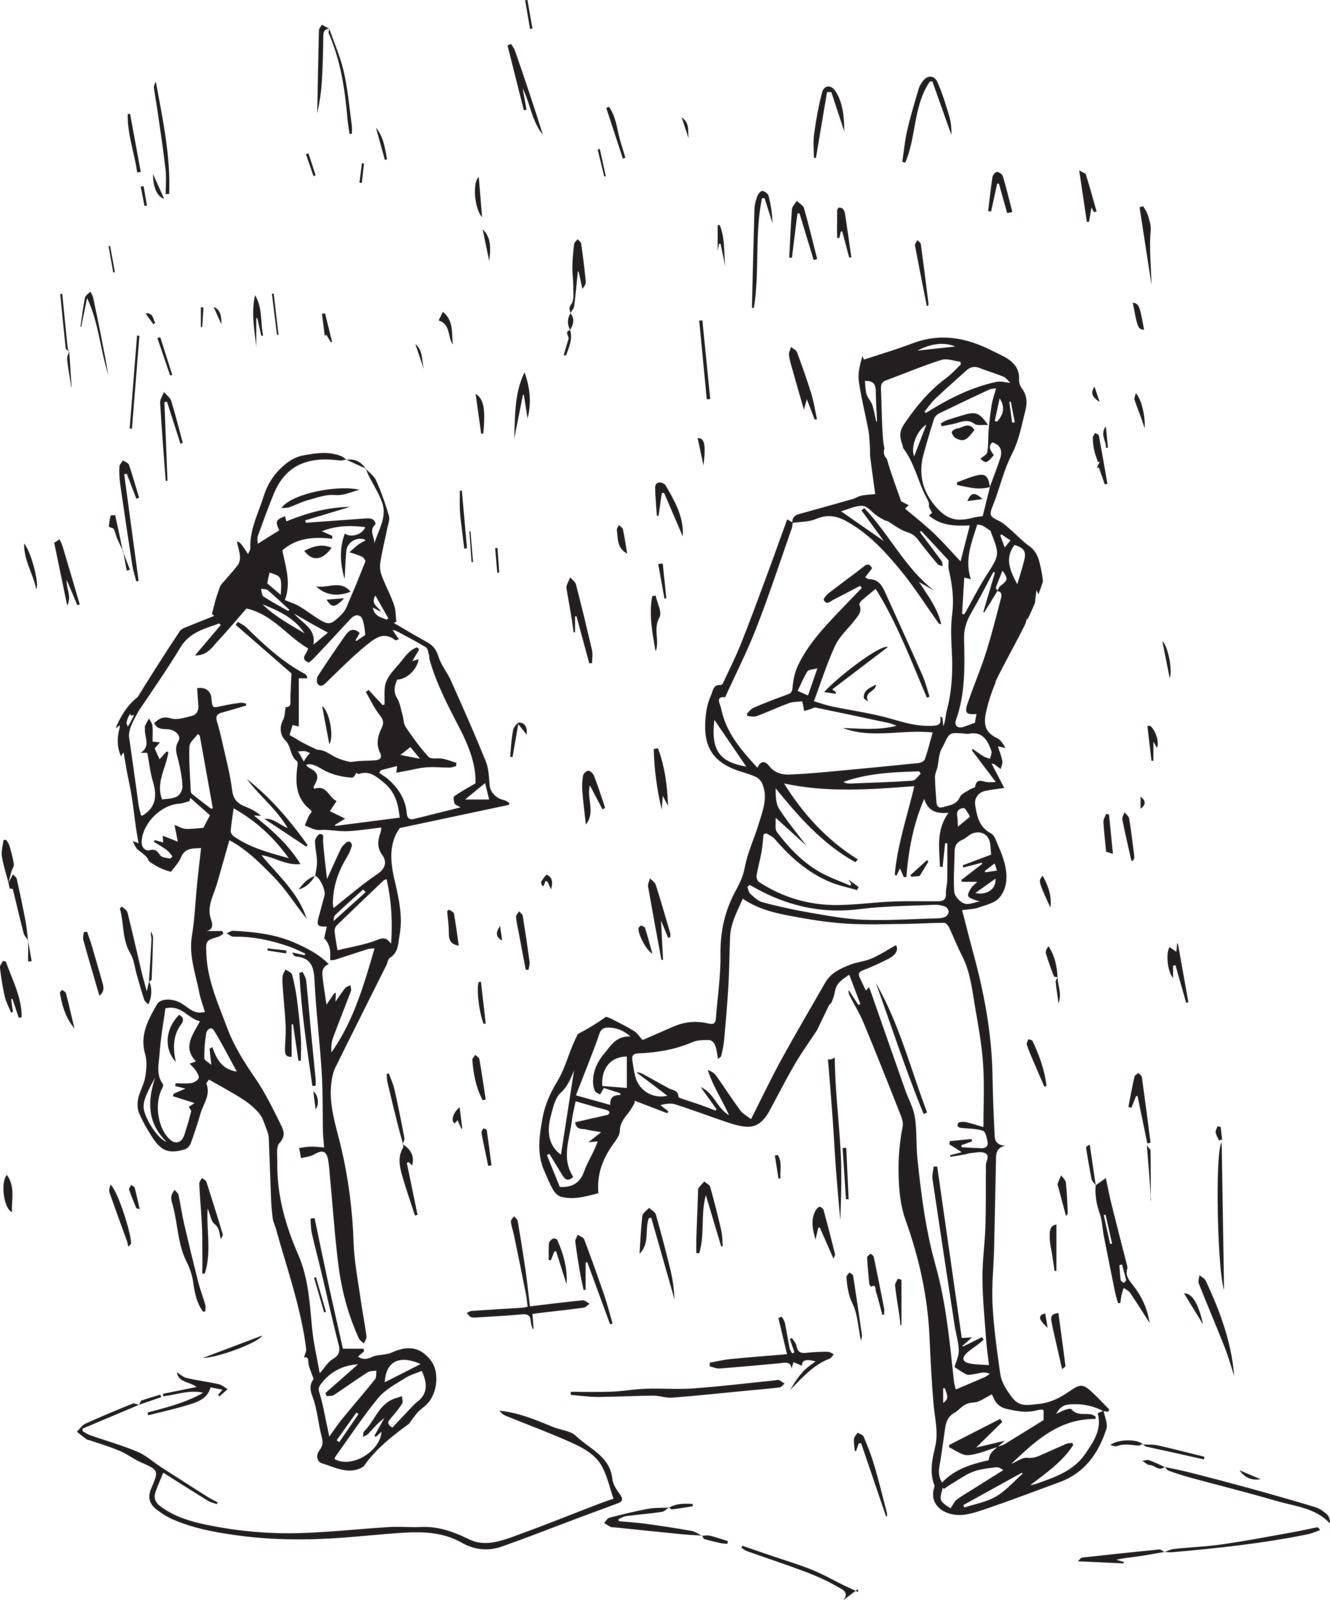 Sketch of Runners in Rain vector illustration